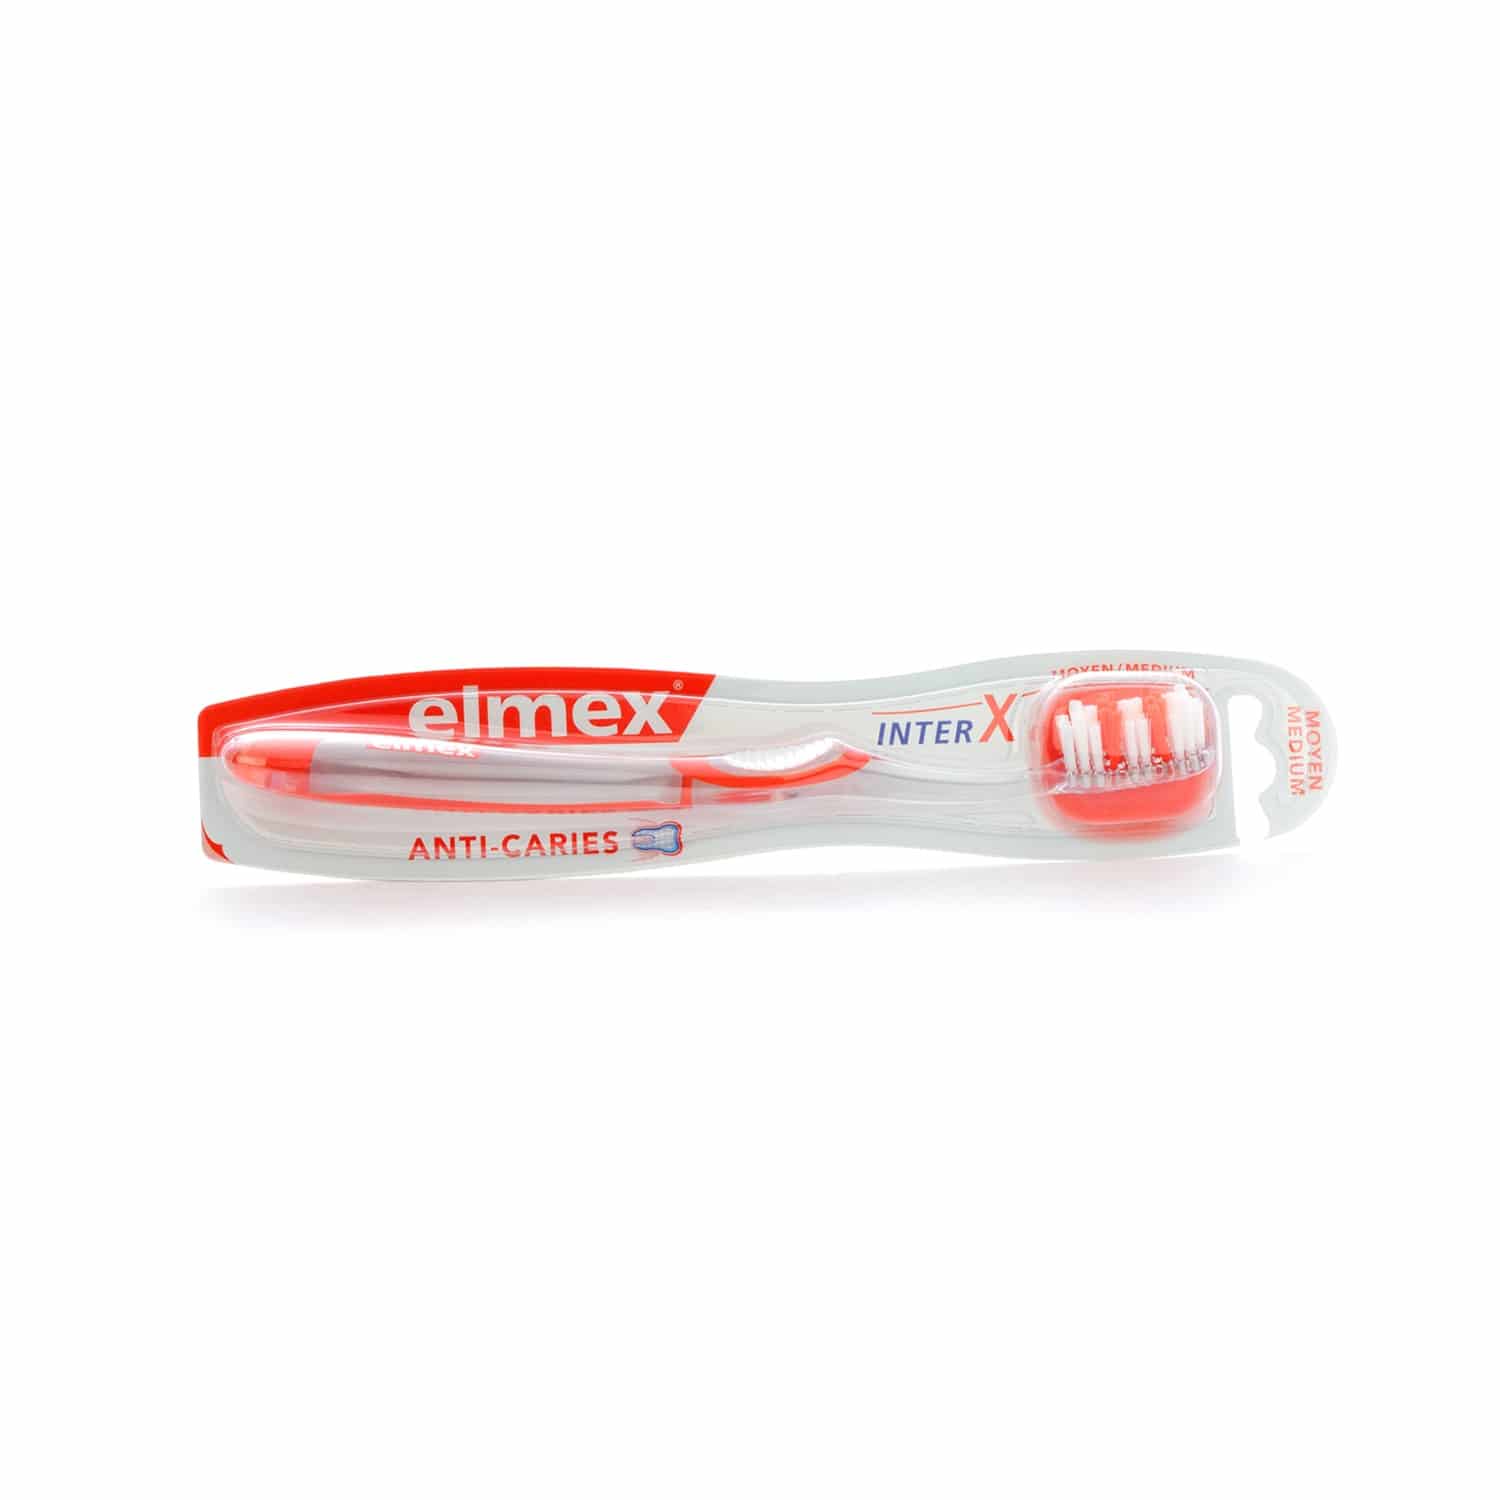 Elmex Anti-Caries Medium Tandenborstel